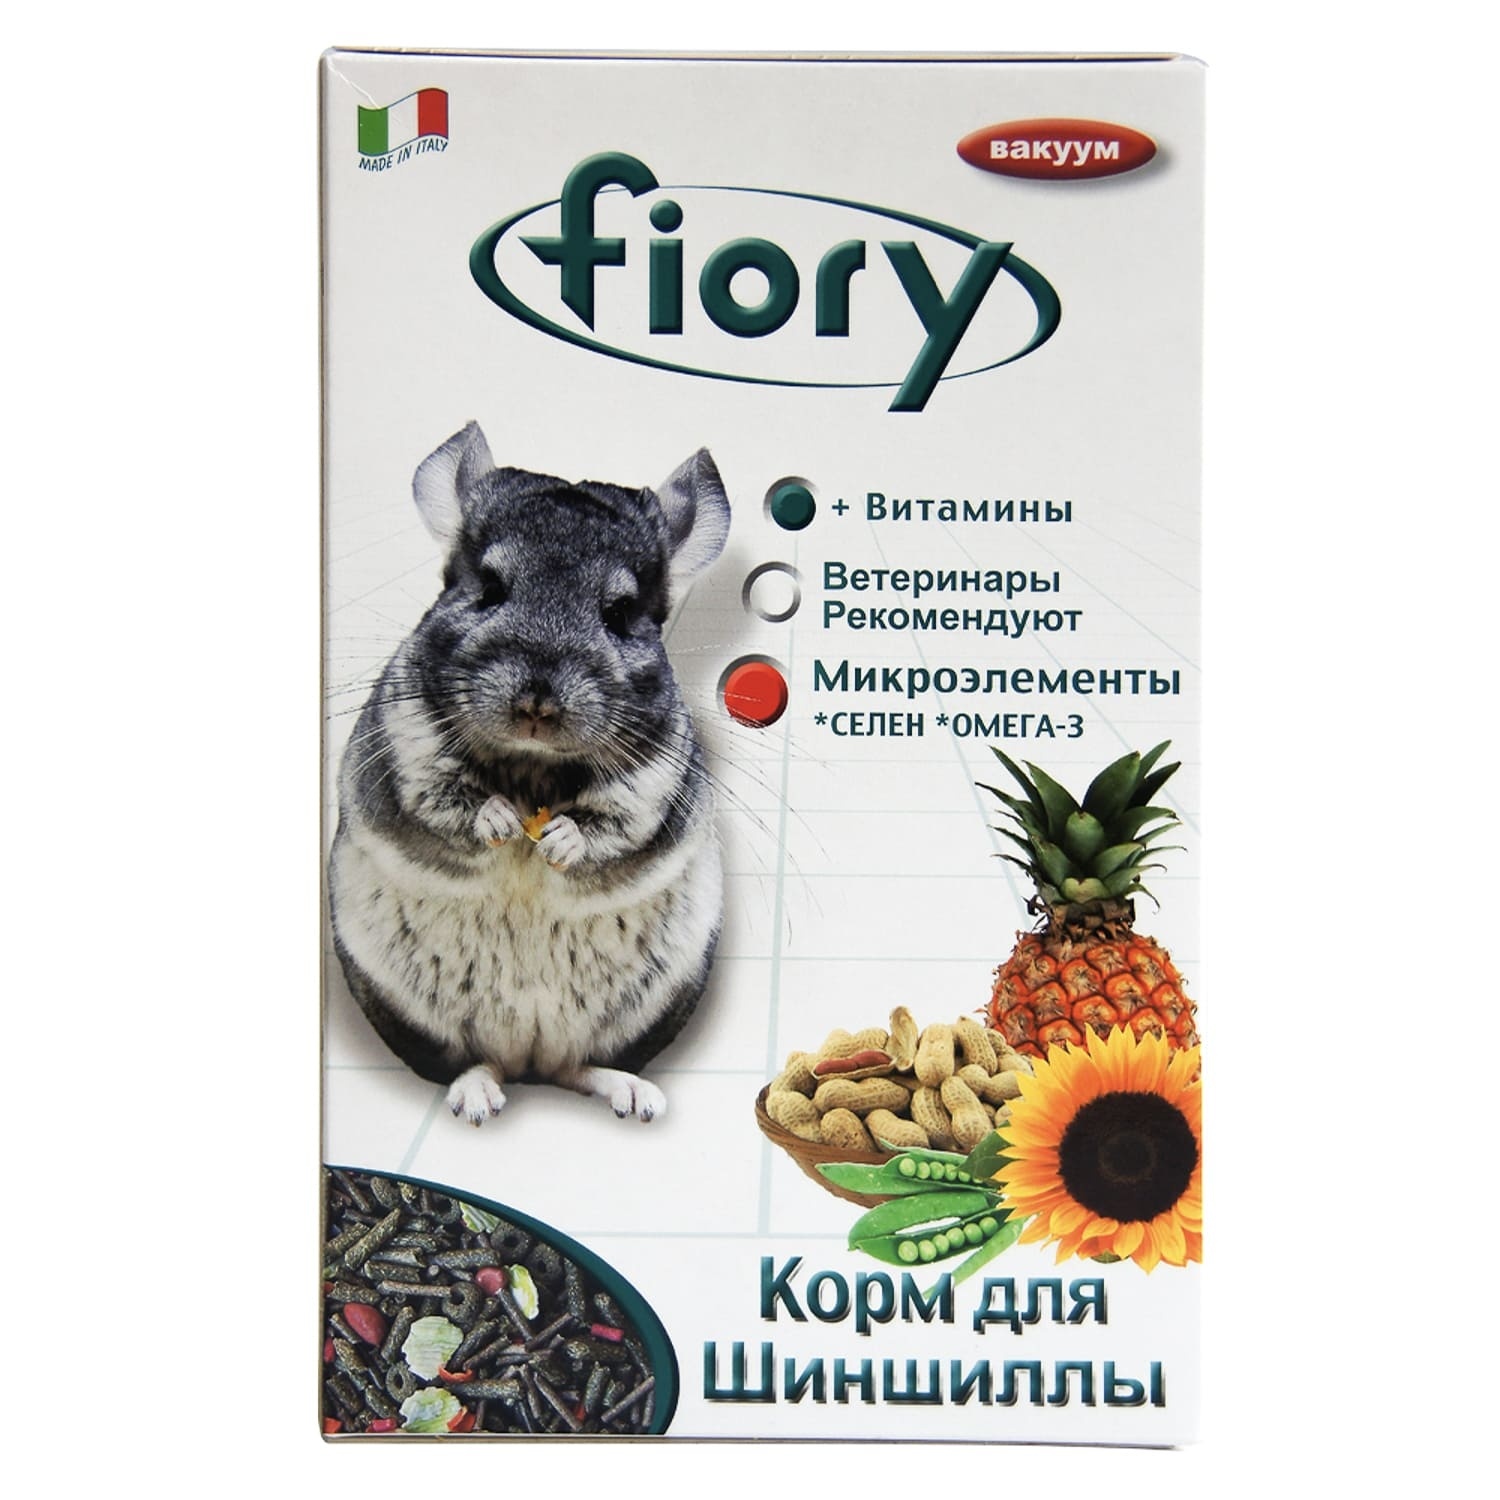 Fiory Fiory корм для шиншилл (800 г) корм для дегу fiory deggy 800 г